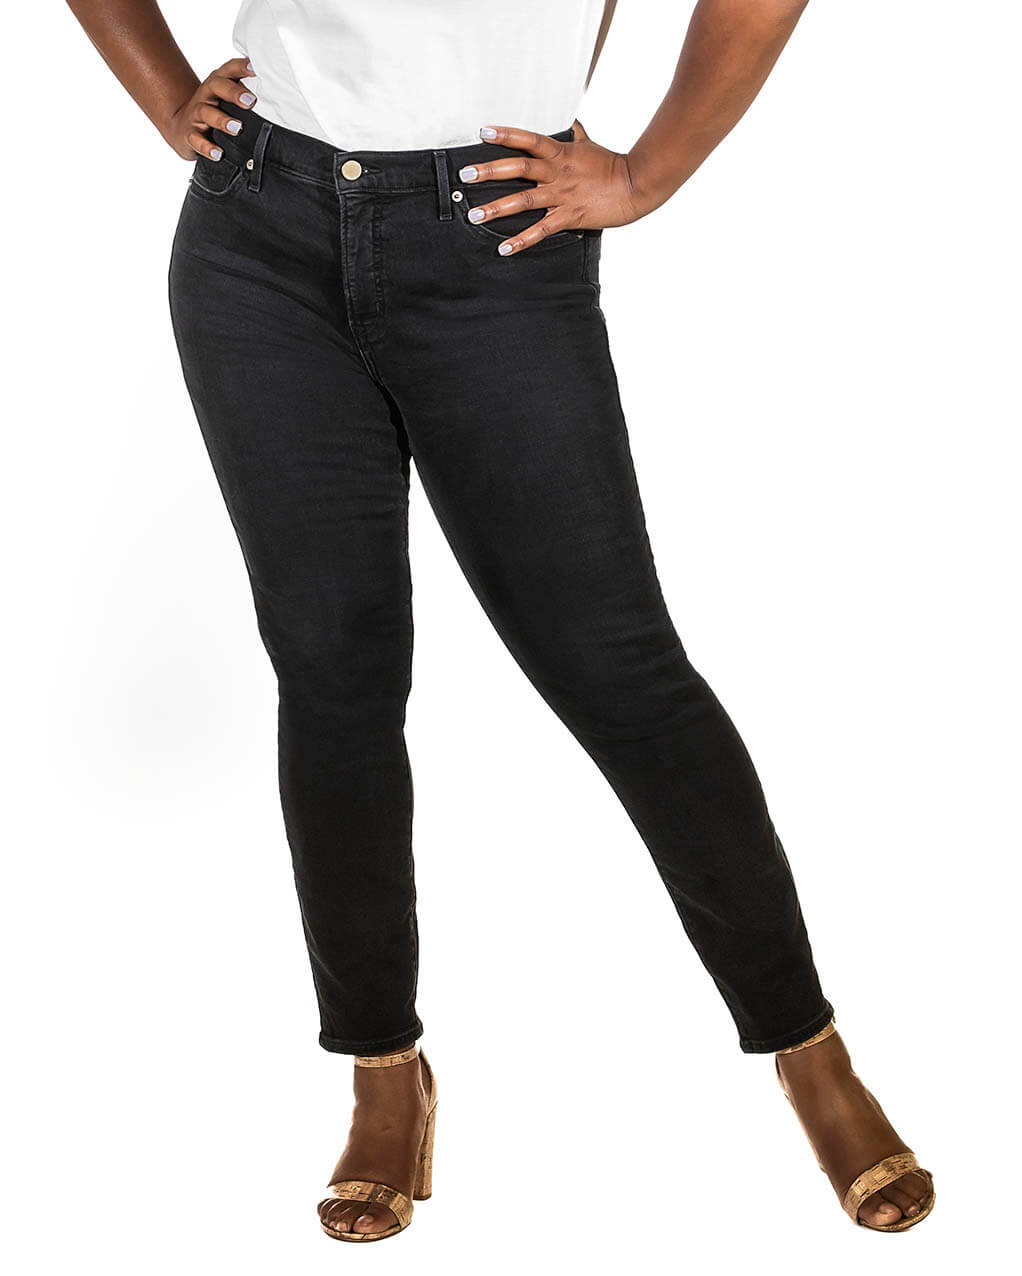 Skinny Jean - Skinny Fit Women's Jeans | Revtown